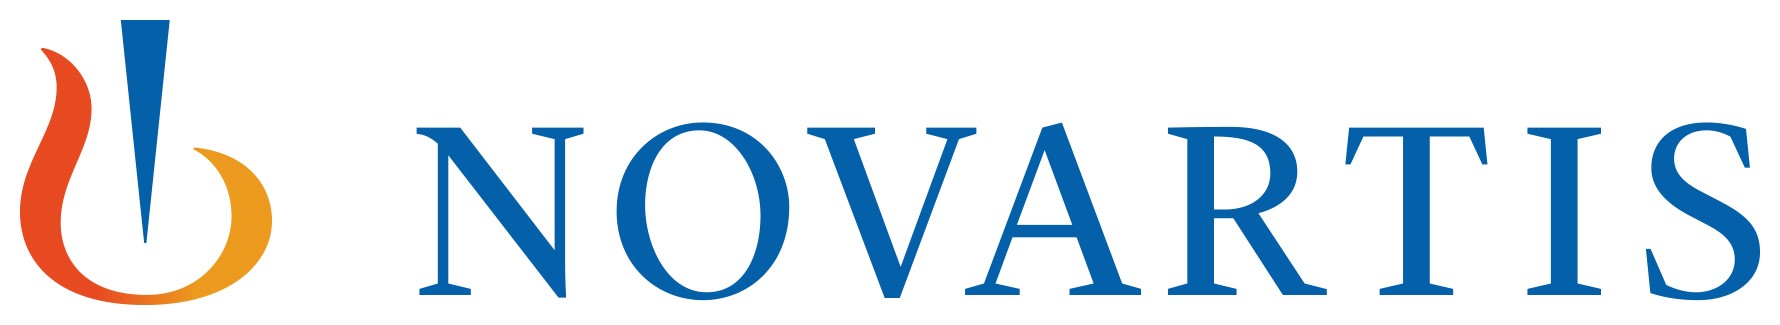 novartis_logo_pos_jpg